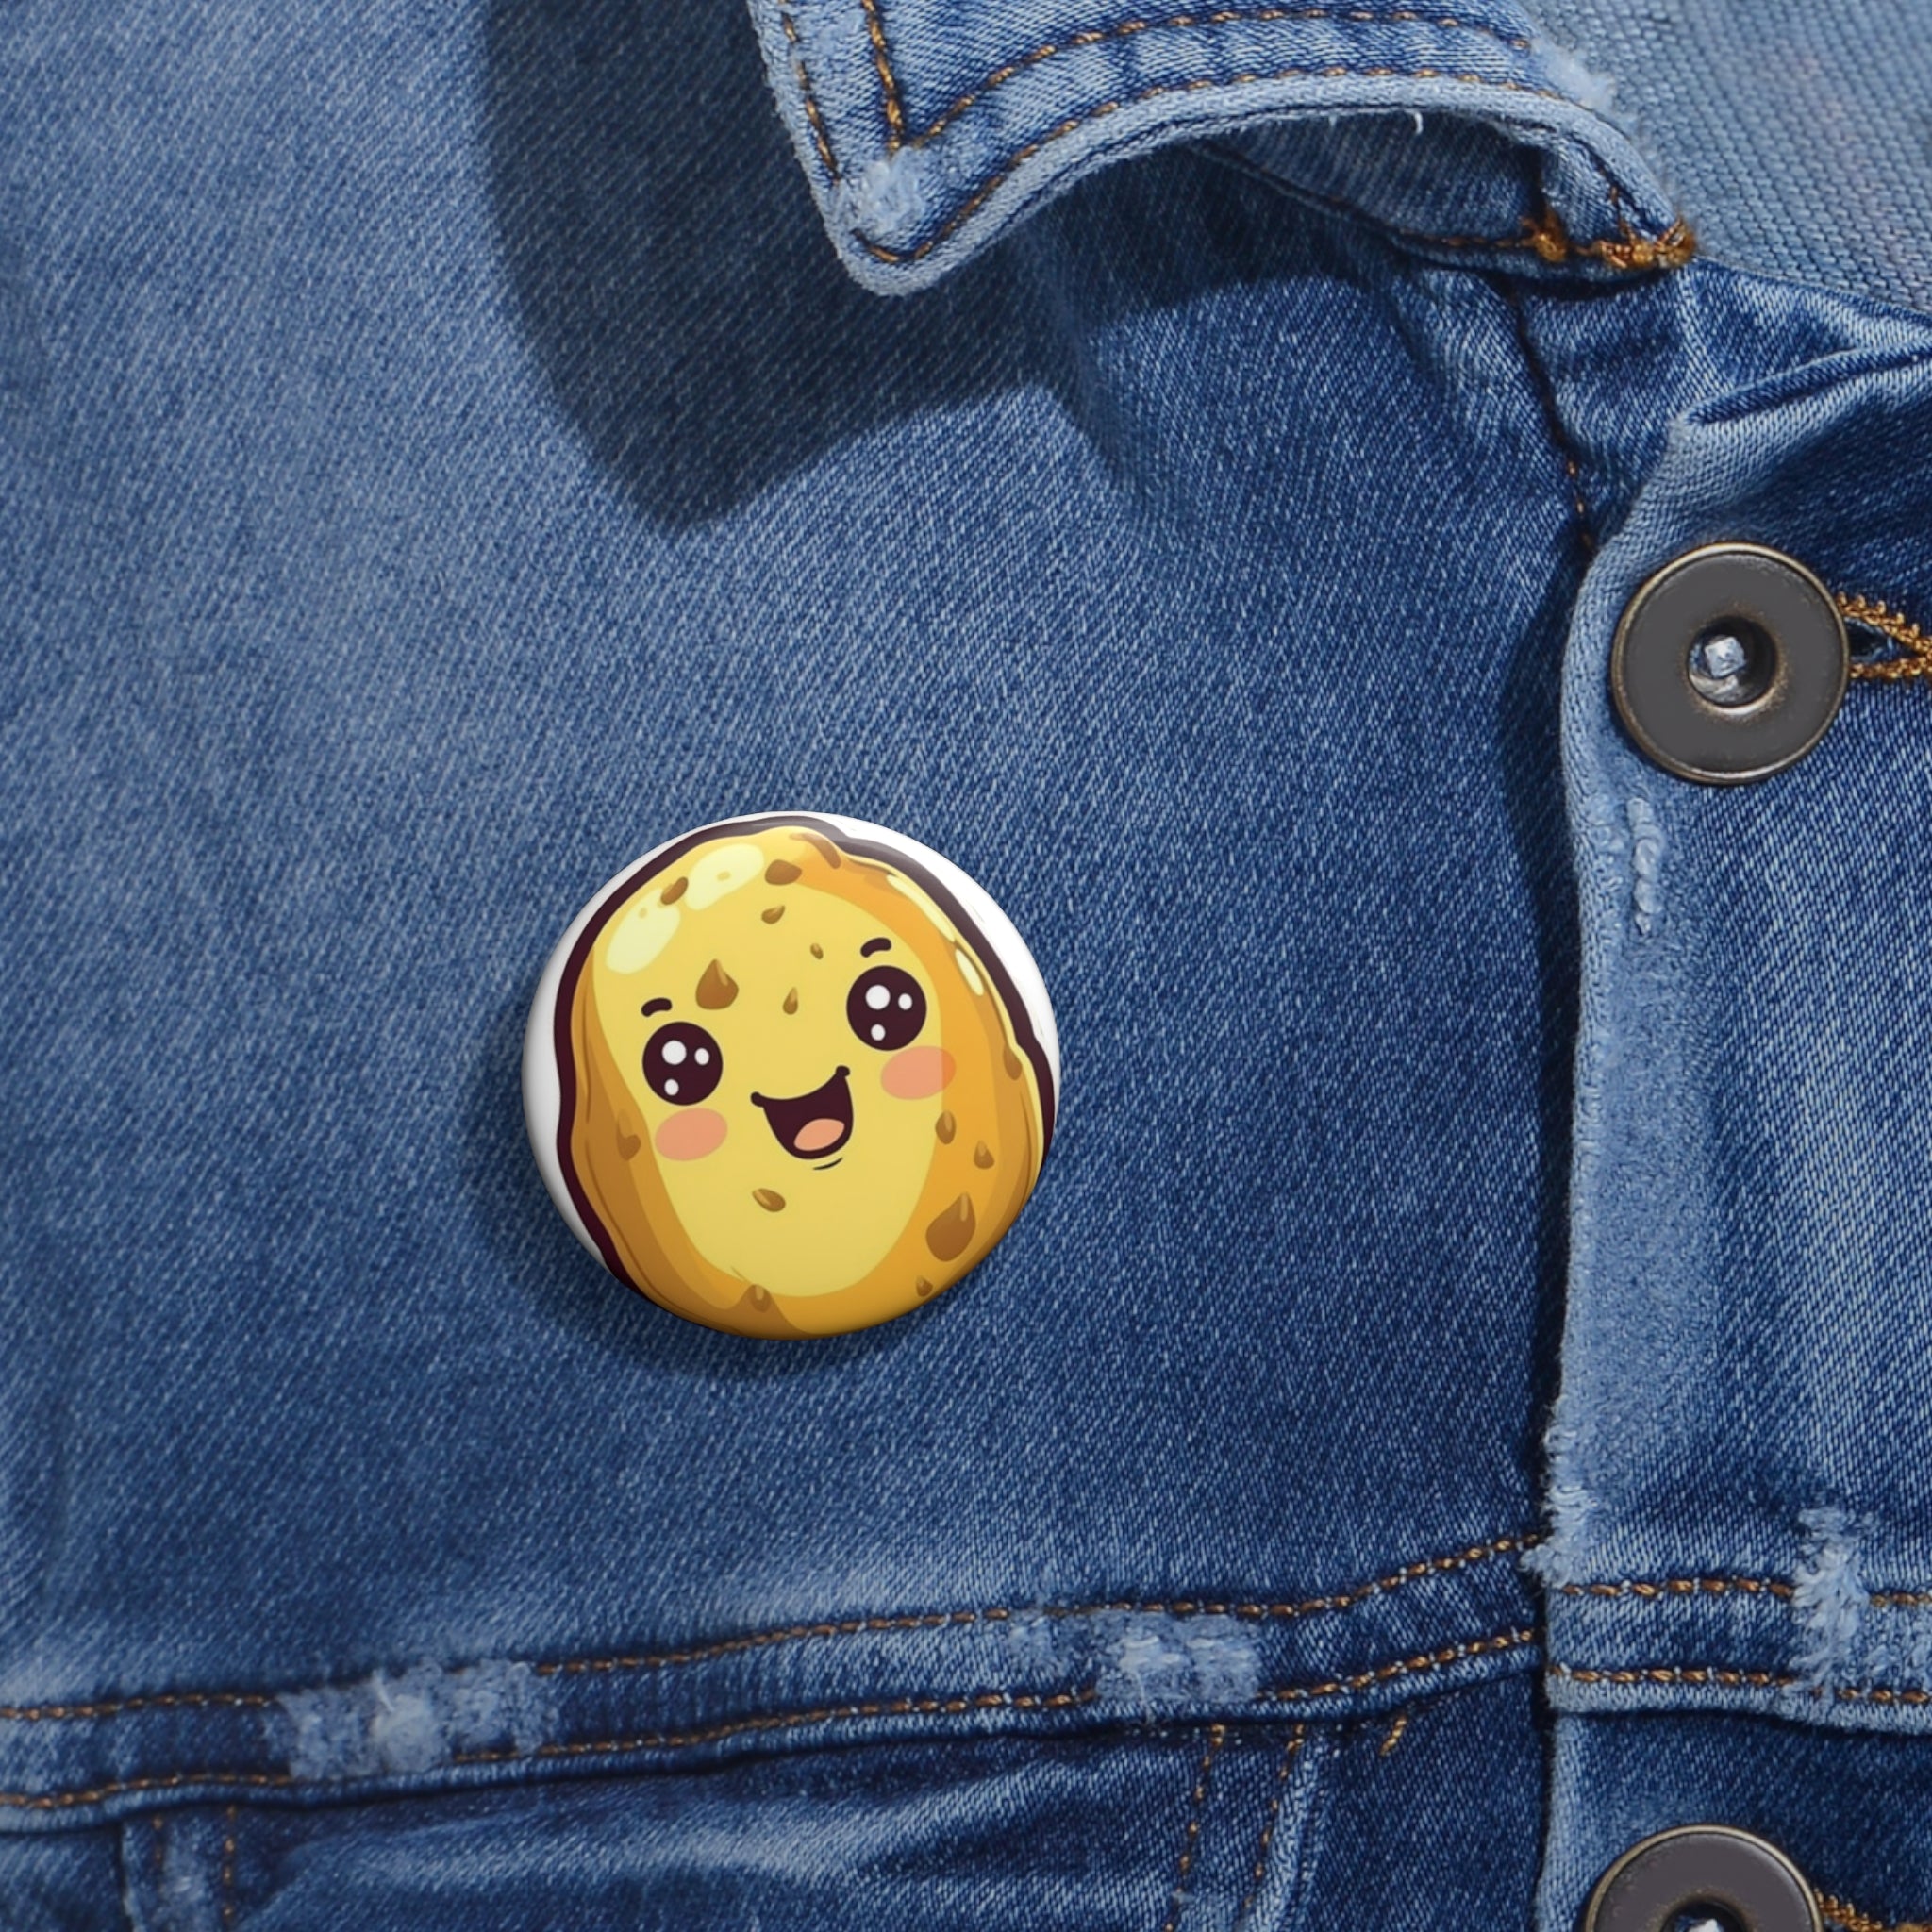 Custom Pin Buttons - Potato